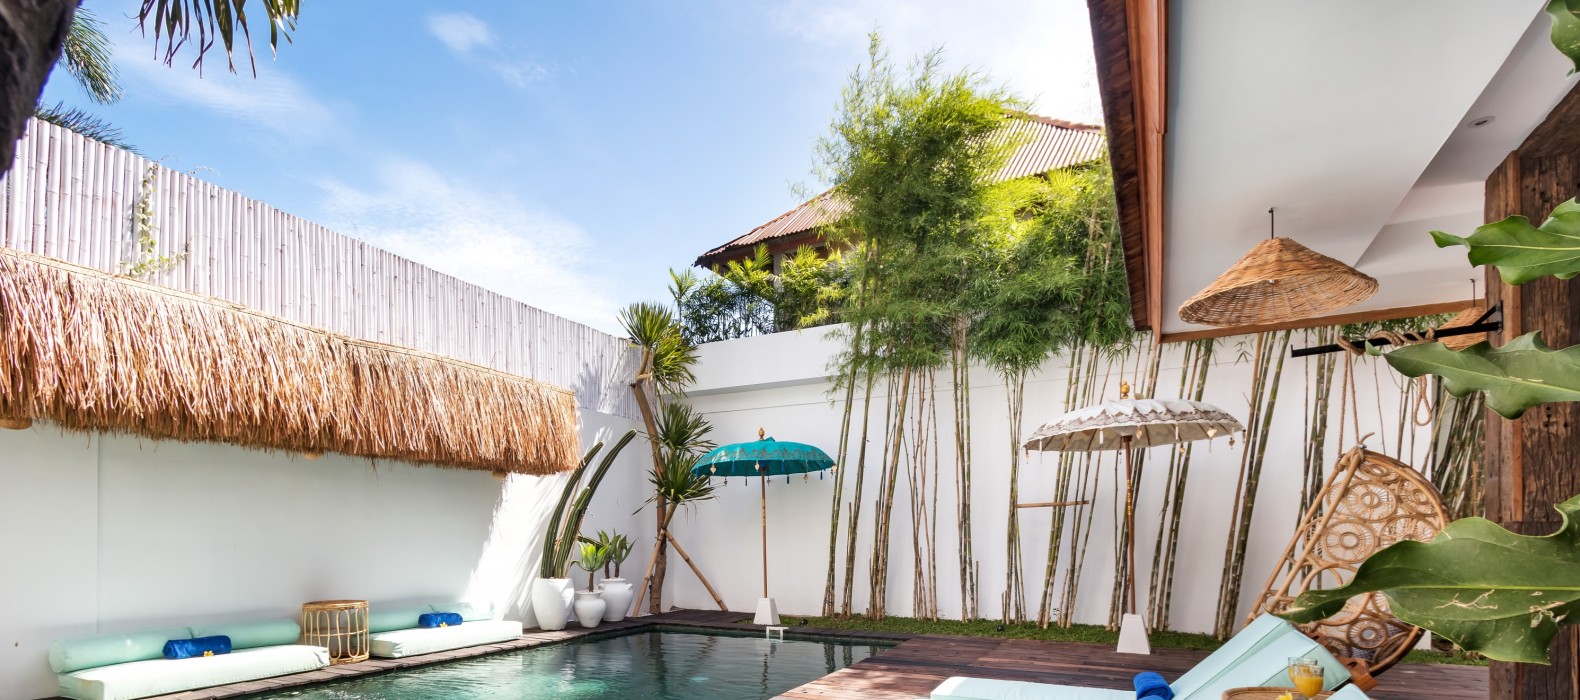 Exterior pool view of Villa Metisse in Bali